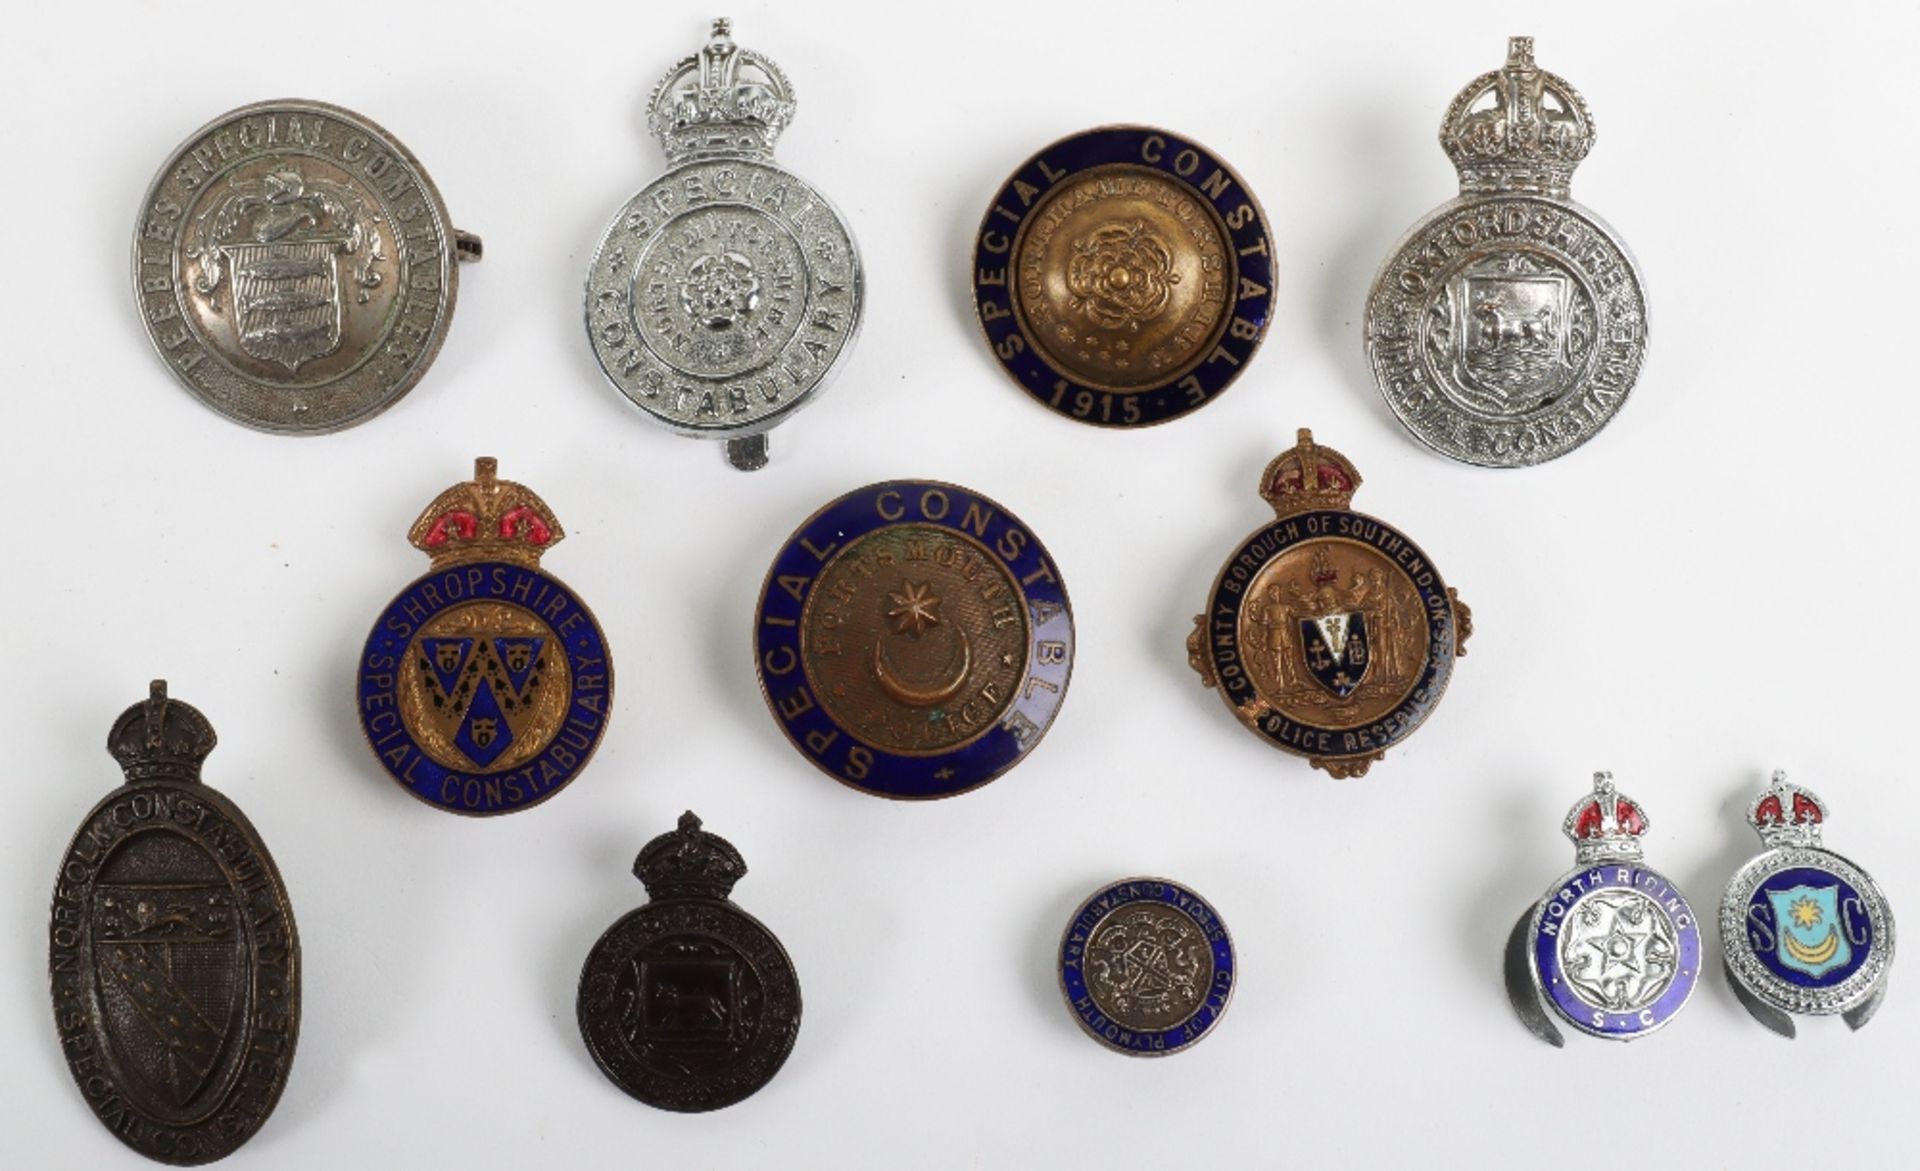 Twelve Special Constabulary Badges